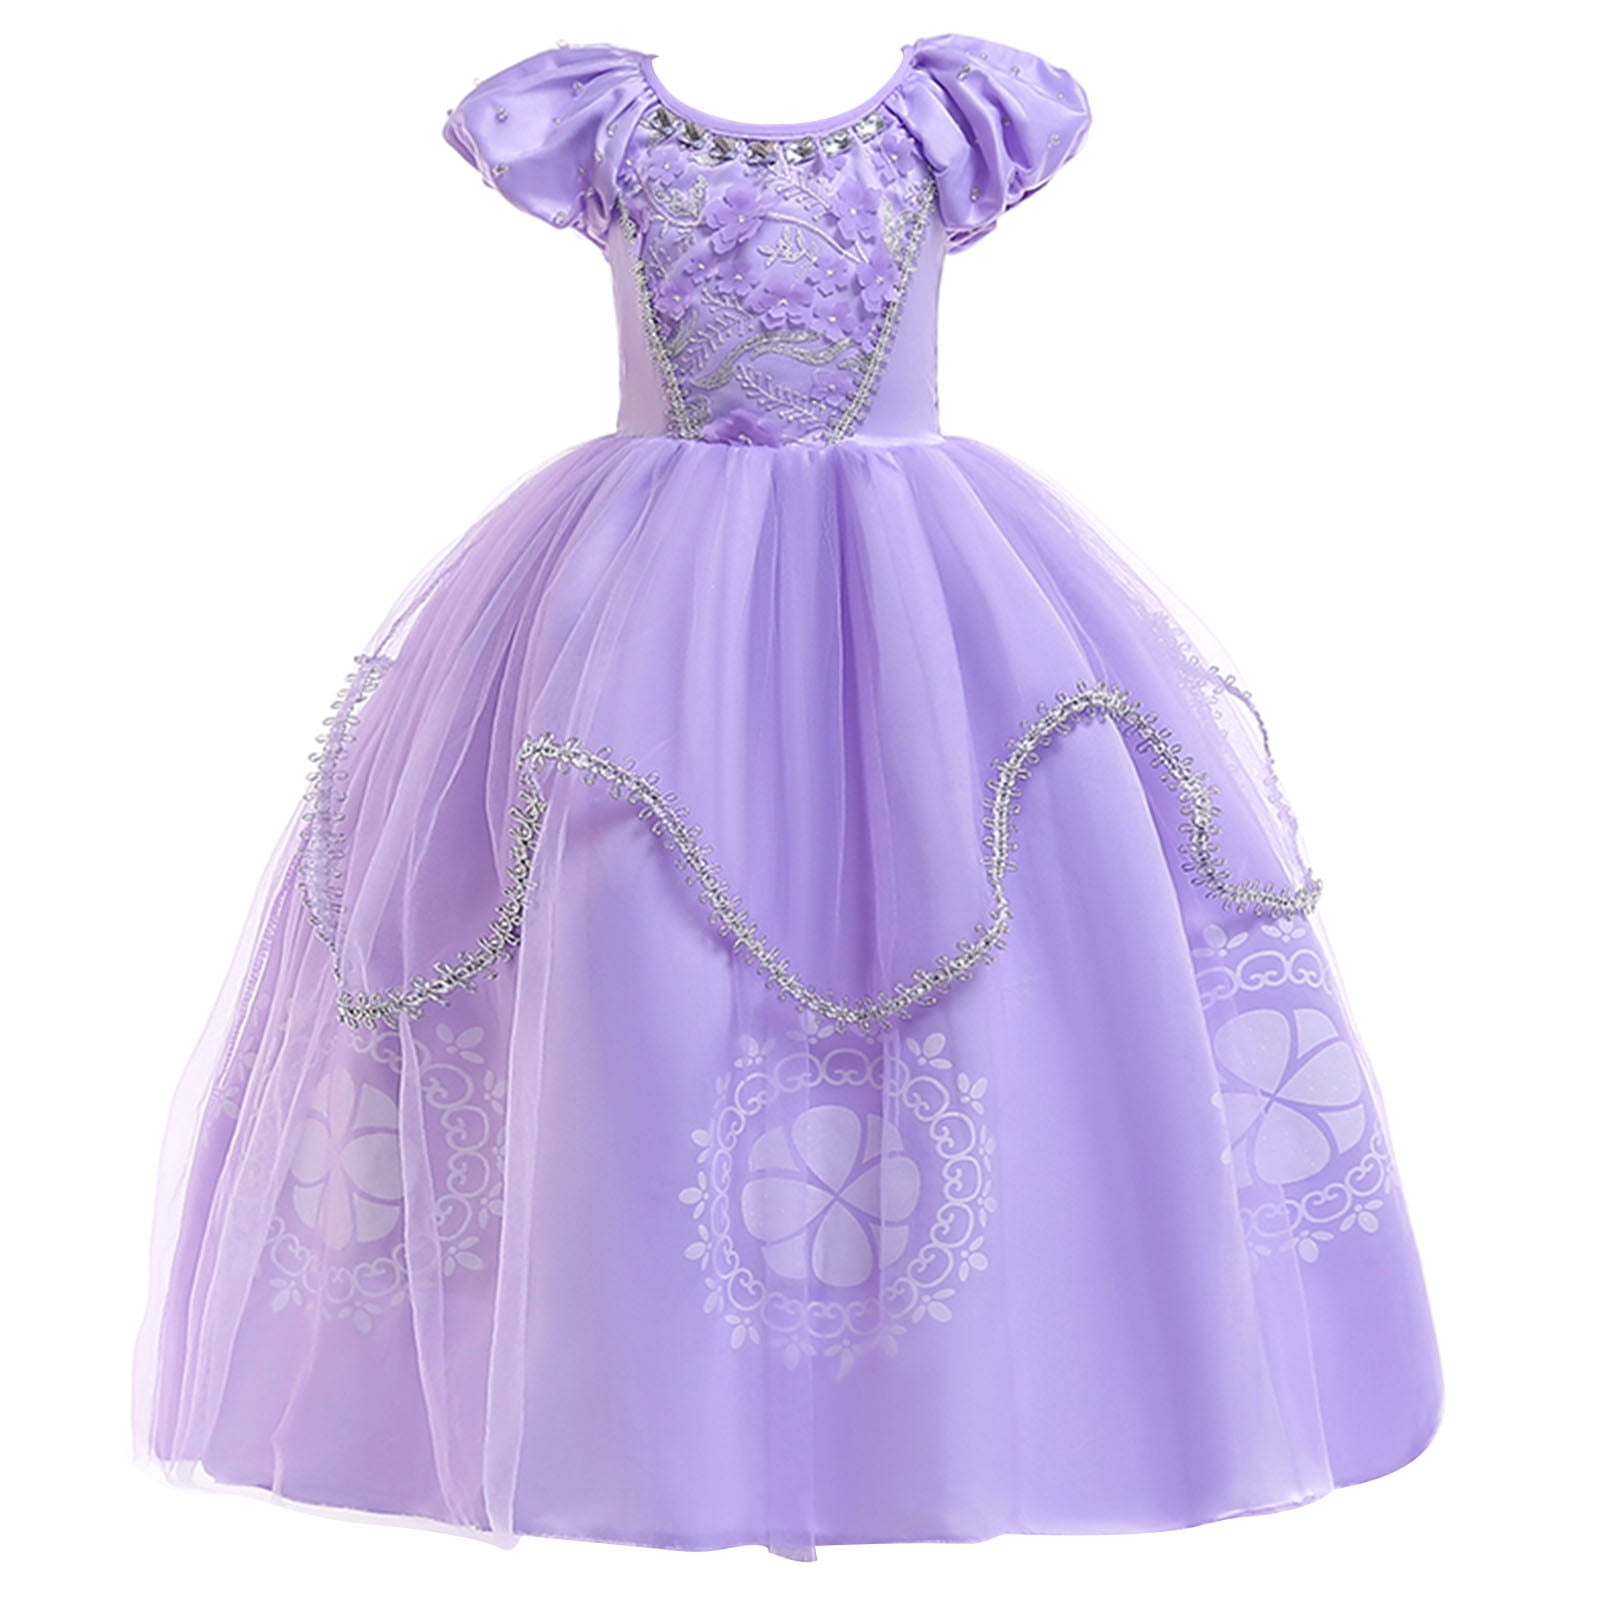 Hawee Princess Dress Girls Purple Costume Princess Dress For Party